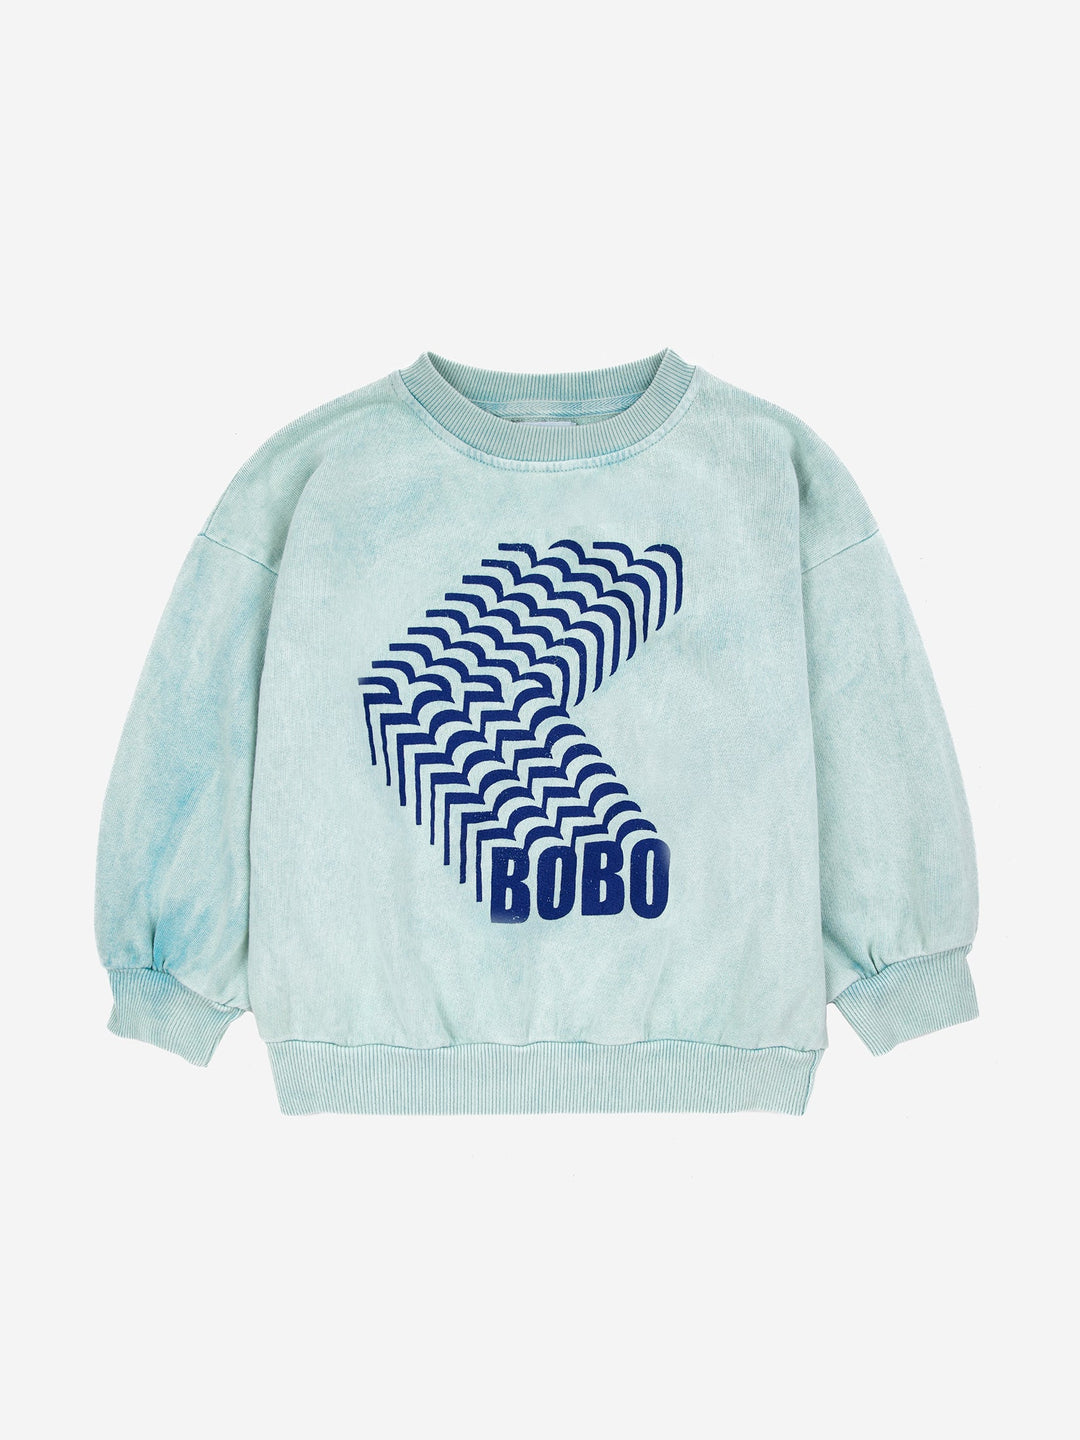 Sweater Bobo Shadow Navy Blue